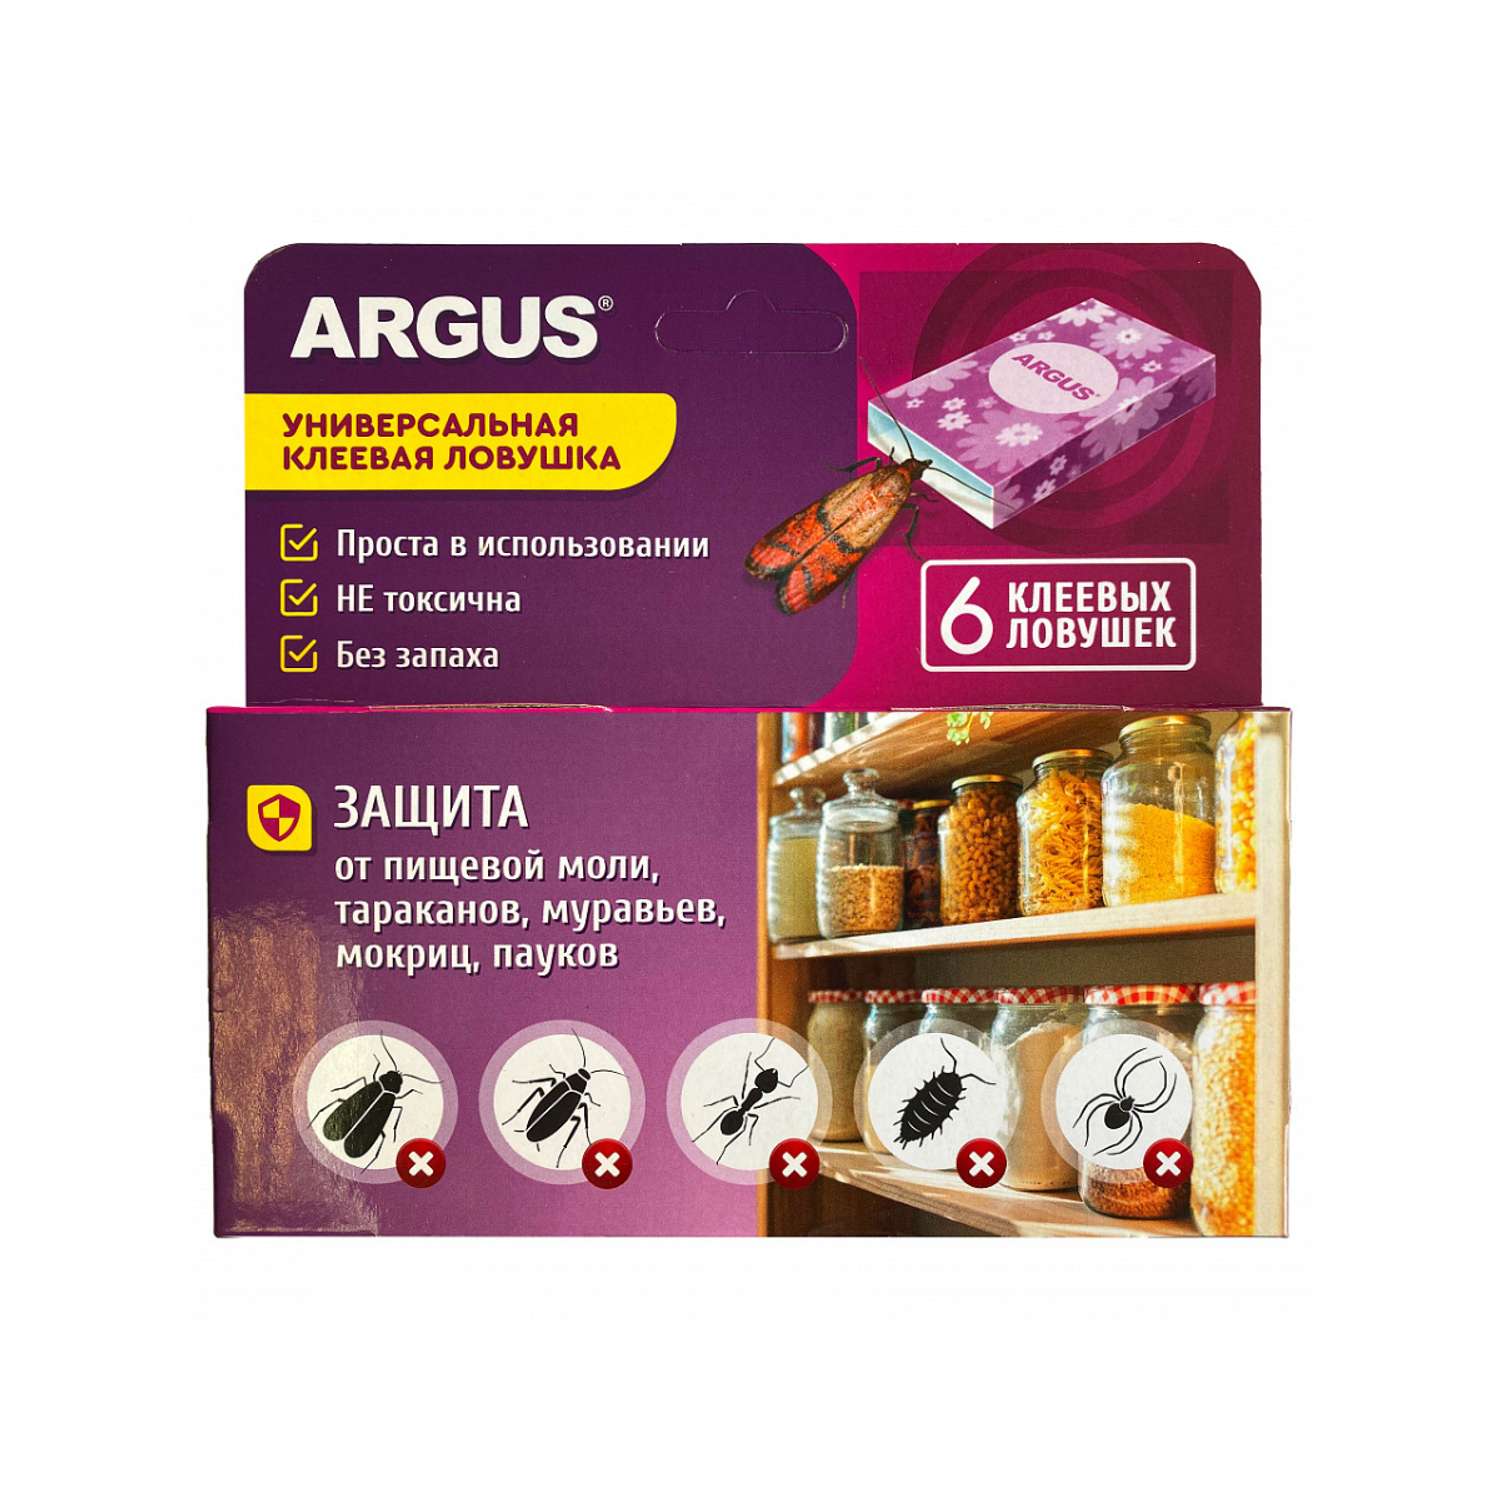 Клеевые ловушки ARGUS от пищевой моли 6 шт - фото 1